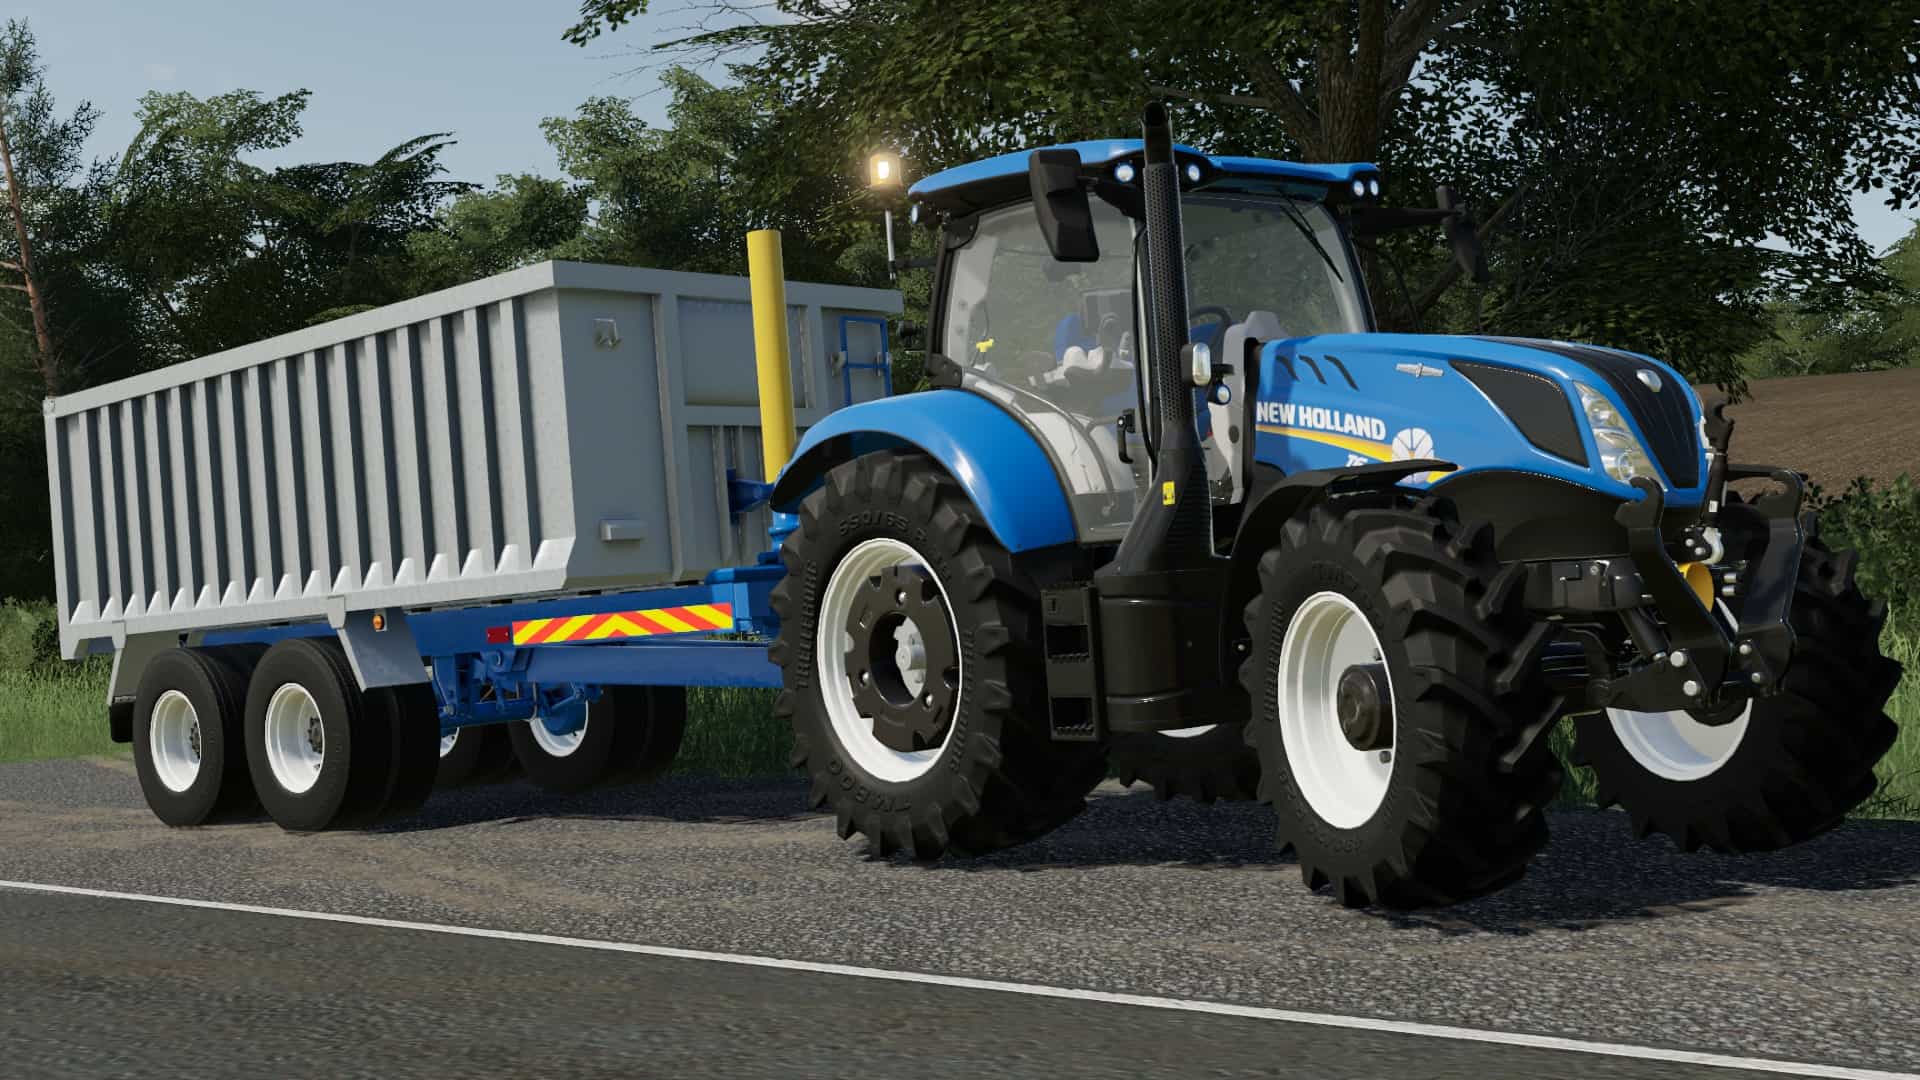 fs19 grain trailer mods